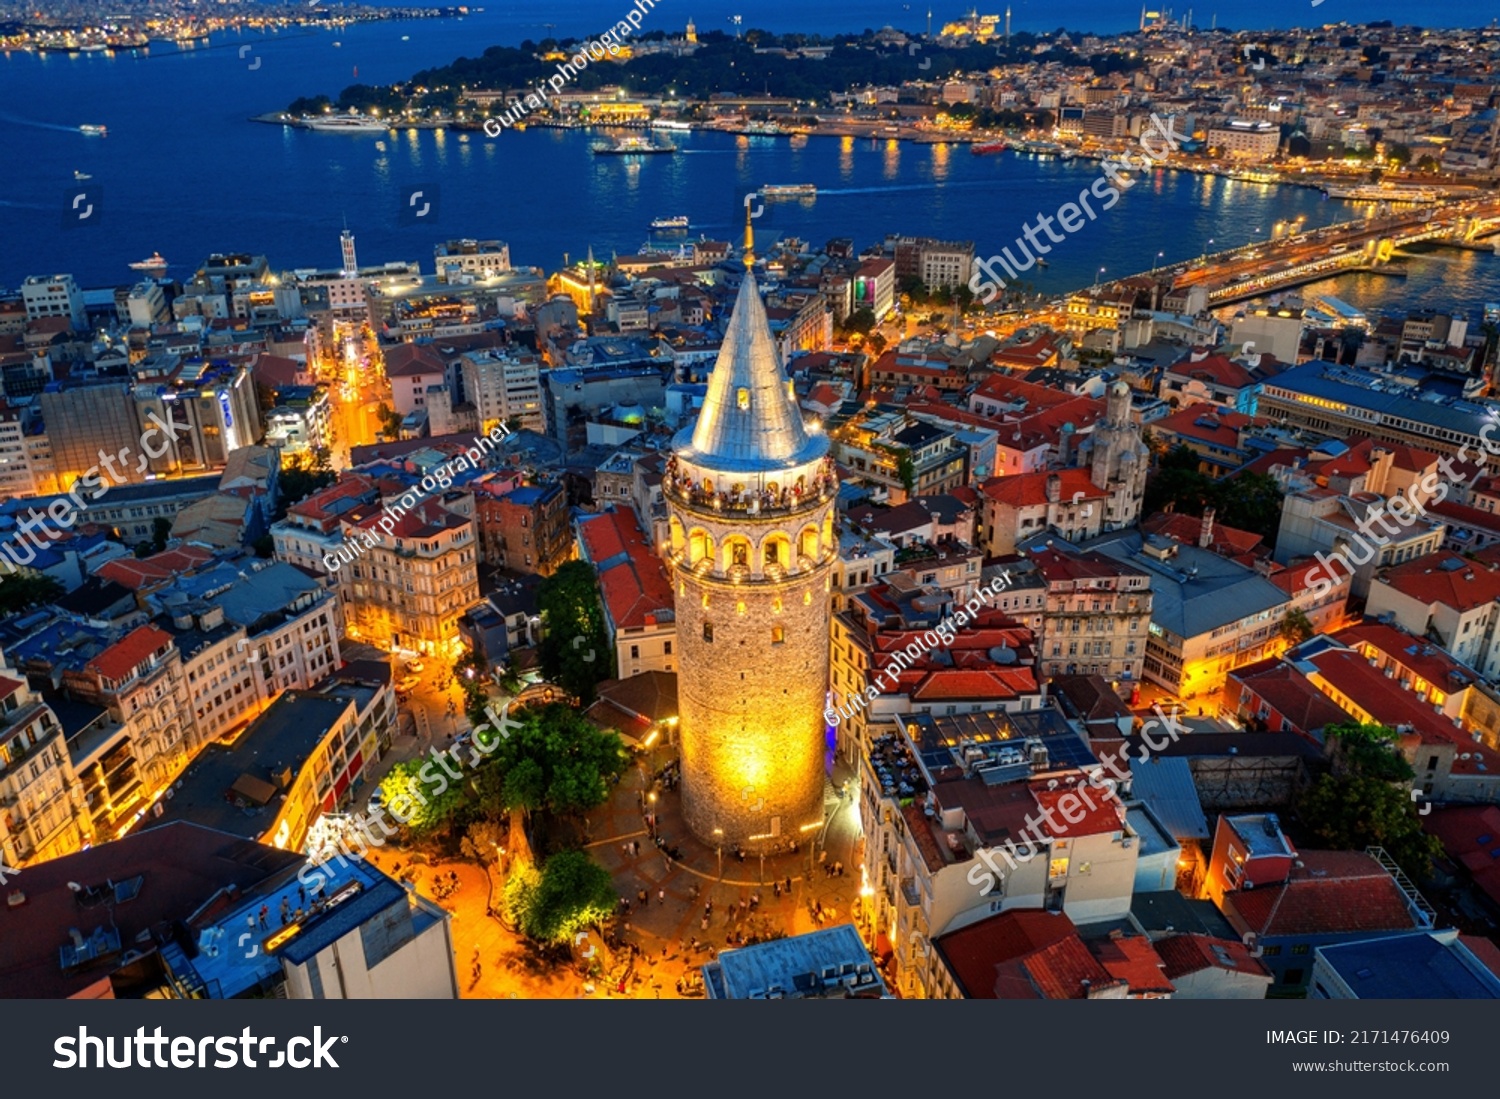 Galata tower at night in Istanbul, Turkey. #2171476409